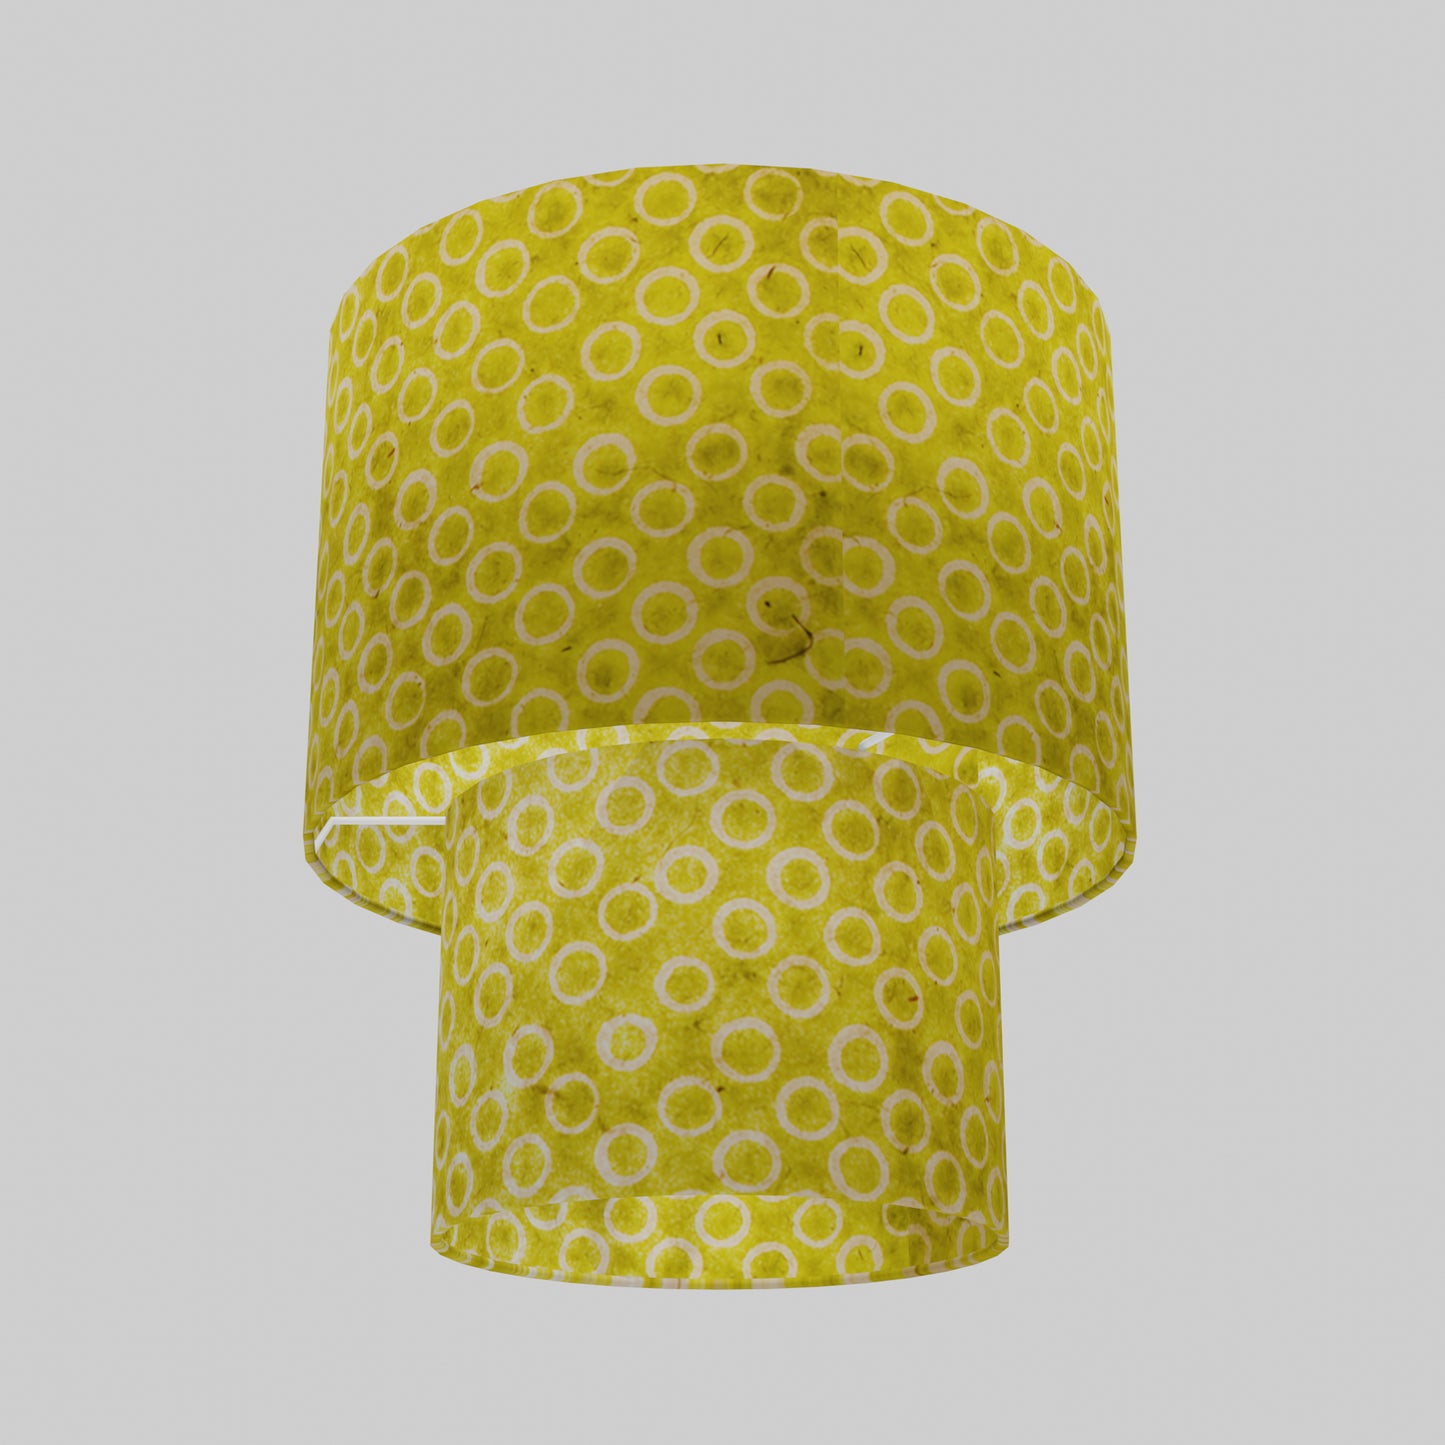 2 Tier Lamp Shade - P02 - Batik Lime Circles, 30cm x 20cm & 20cm x 15cm